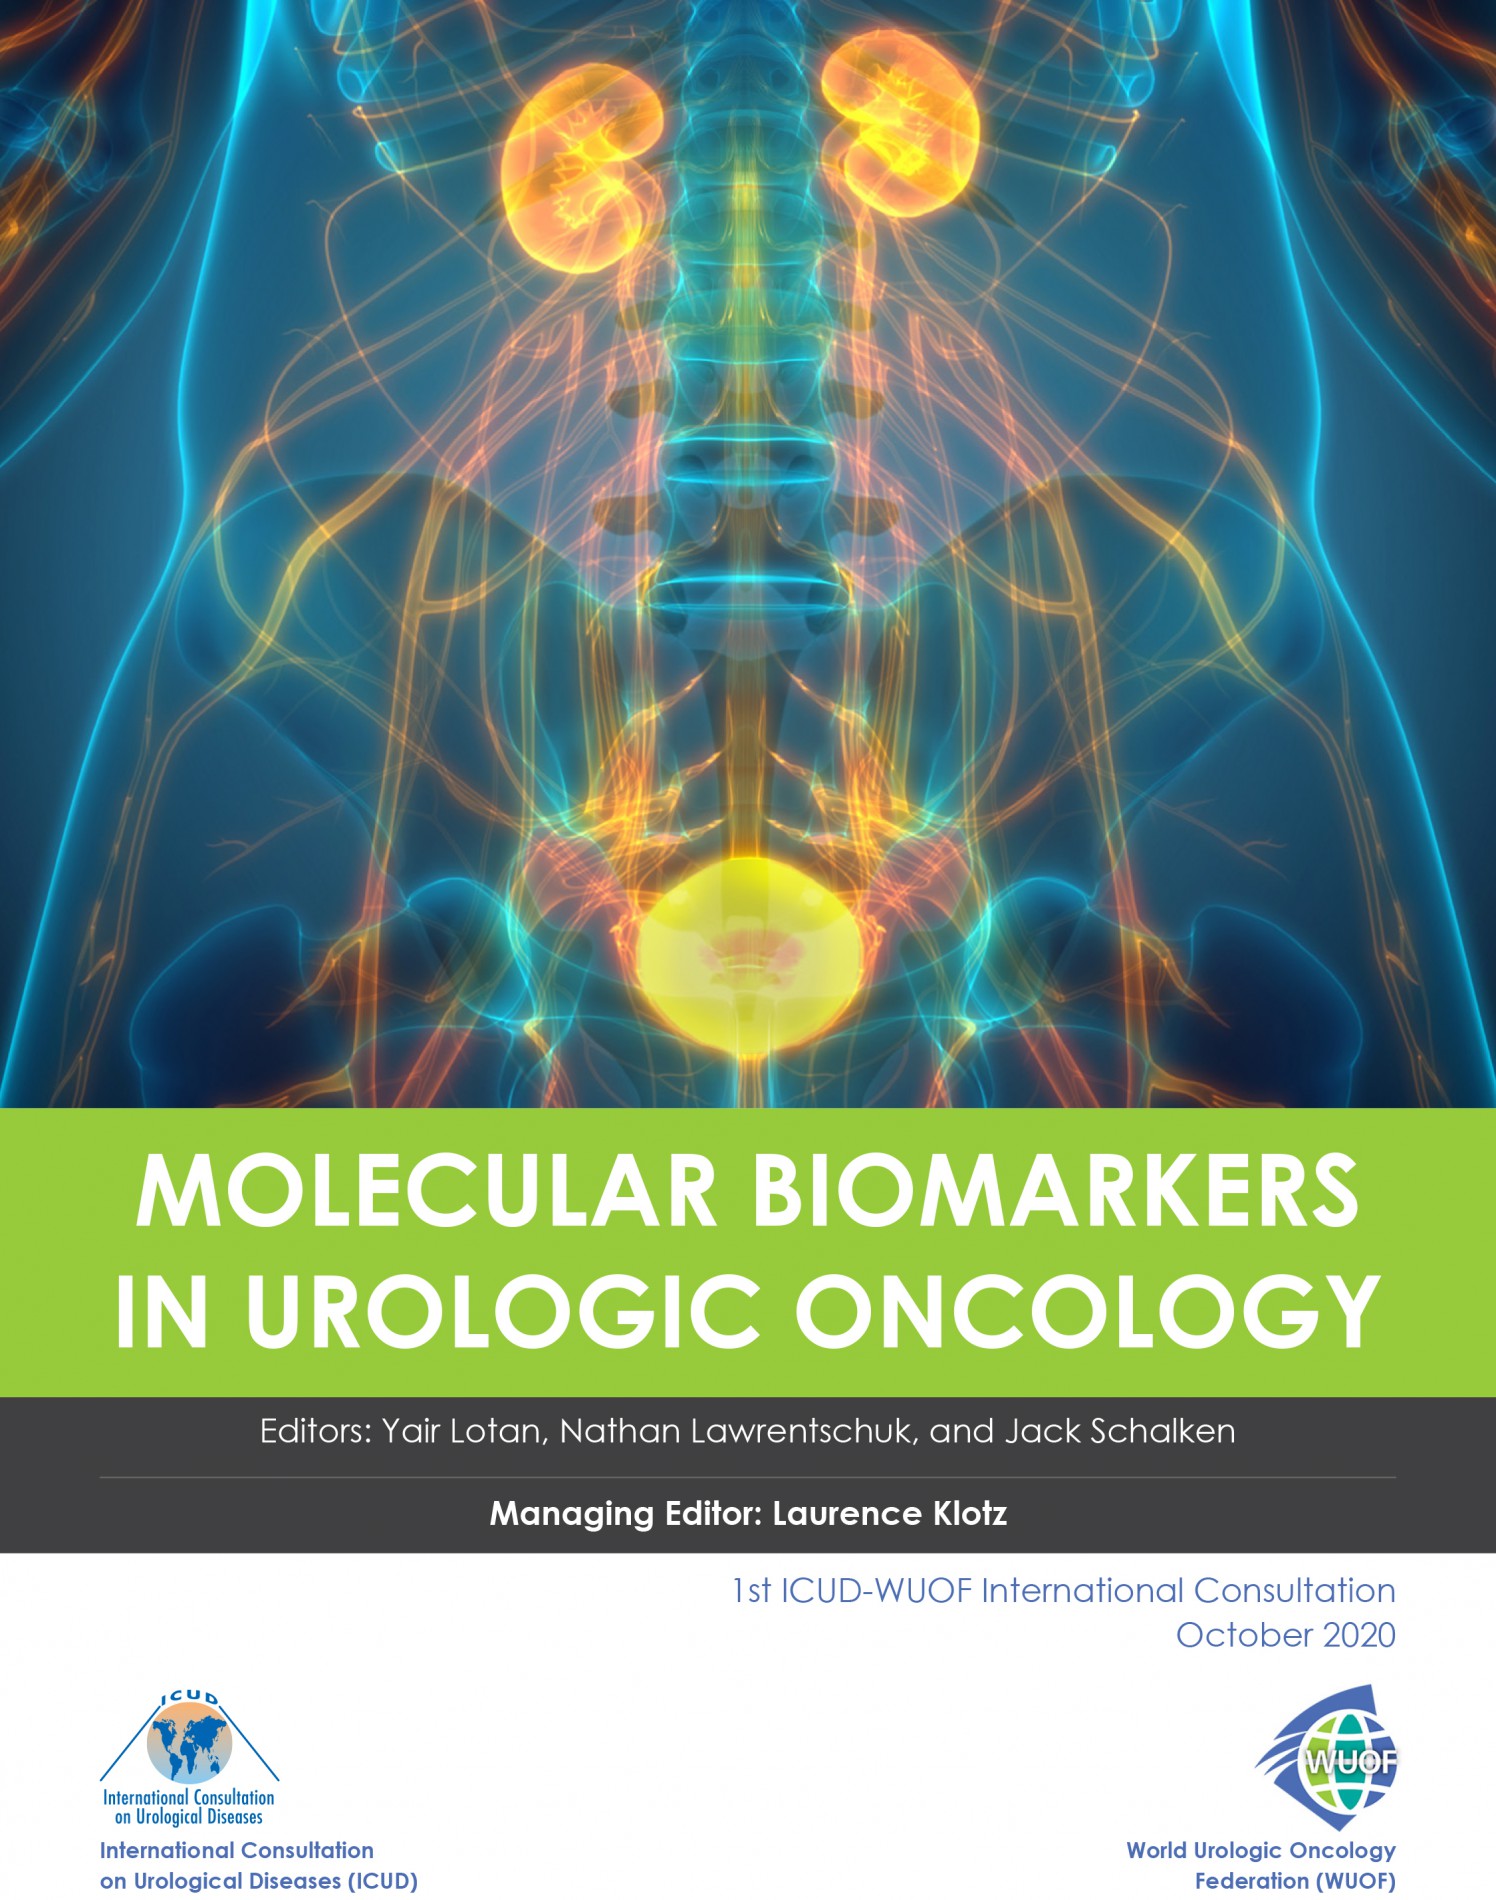 1st ICUD-WUOF Consultation: Molecular Biomarkers in Urology